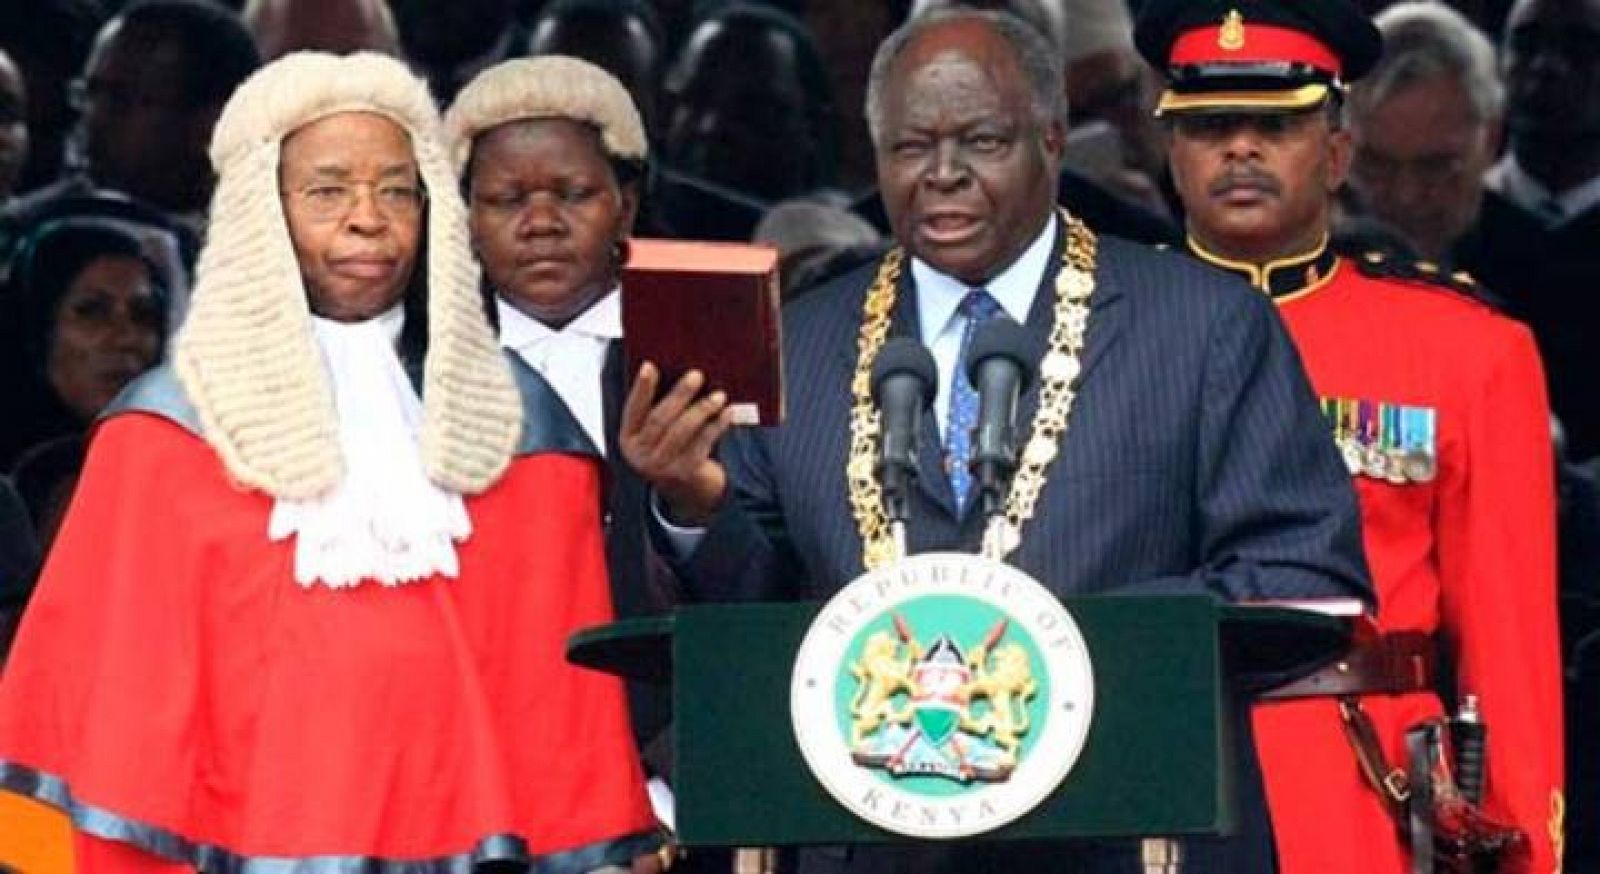 Mwai Kibaki, el presidente keniano, sostienen el nuevo texto durante la ceremonia